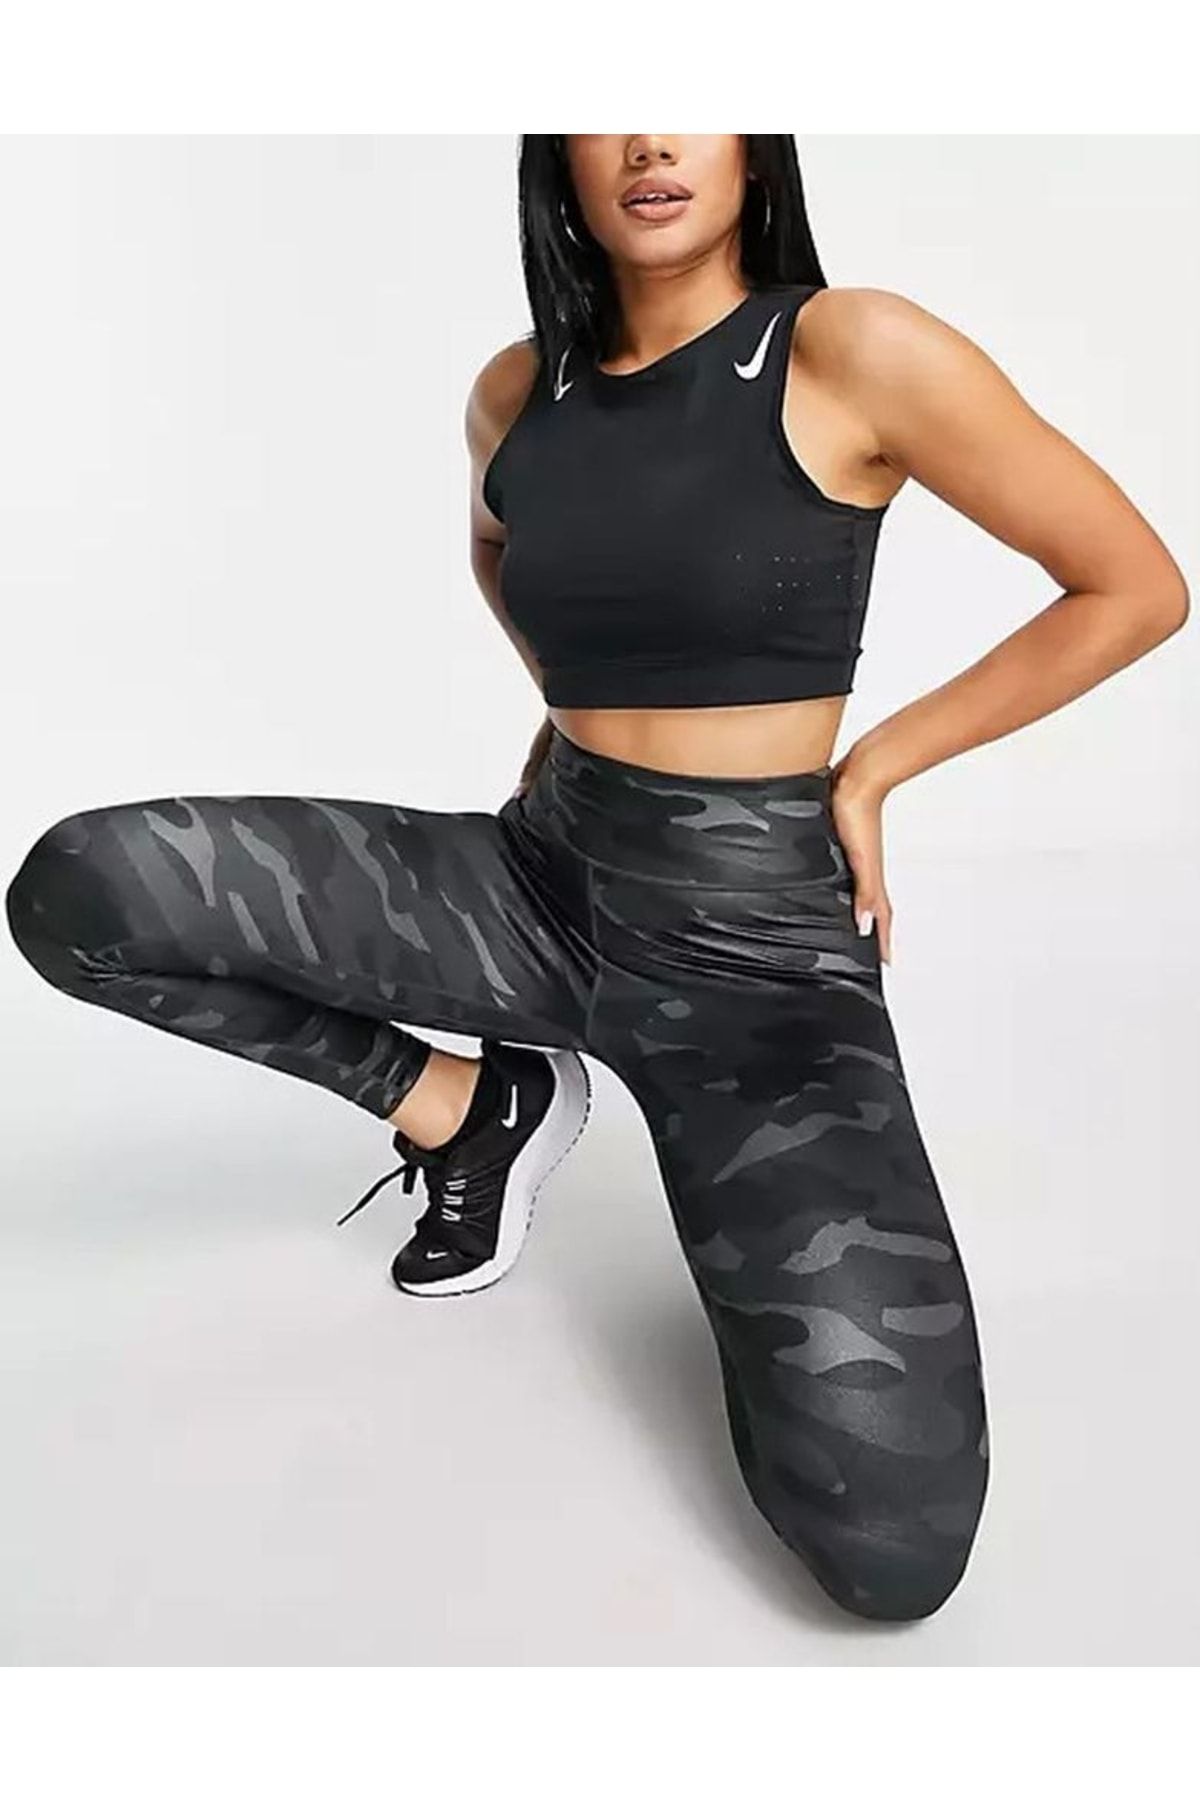 Nike One Women's Dark Grey Camo Print Midrise Leggings (DD4559-070) S/M/L/XL /XXL